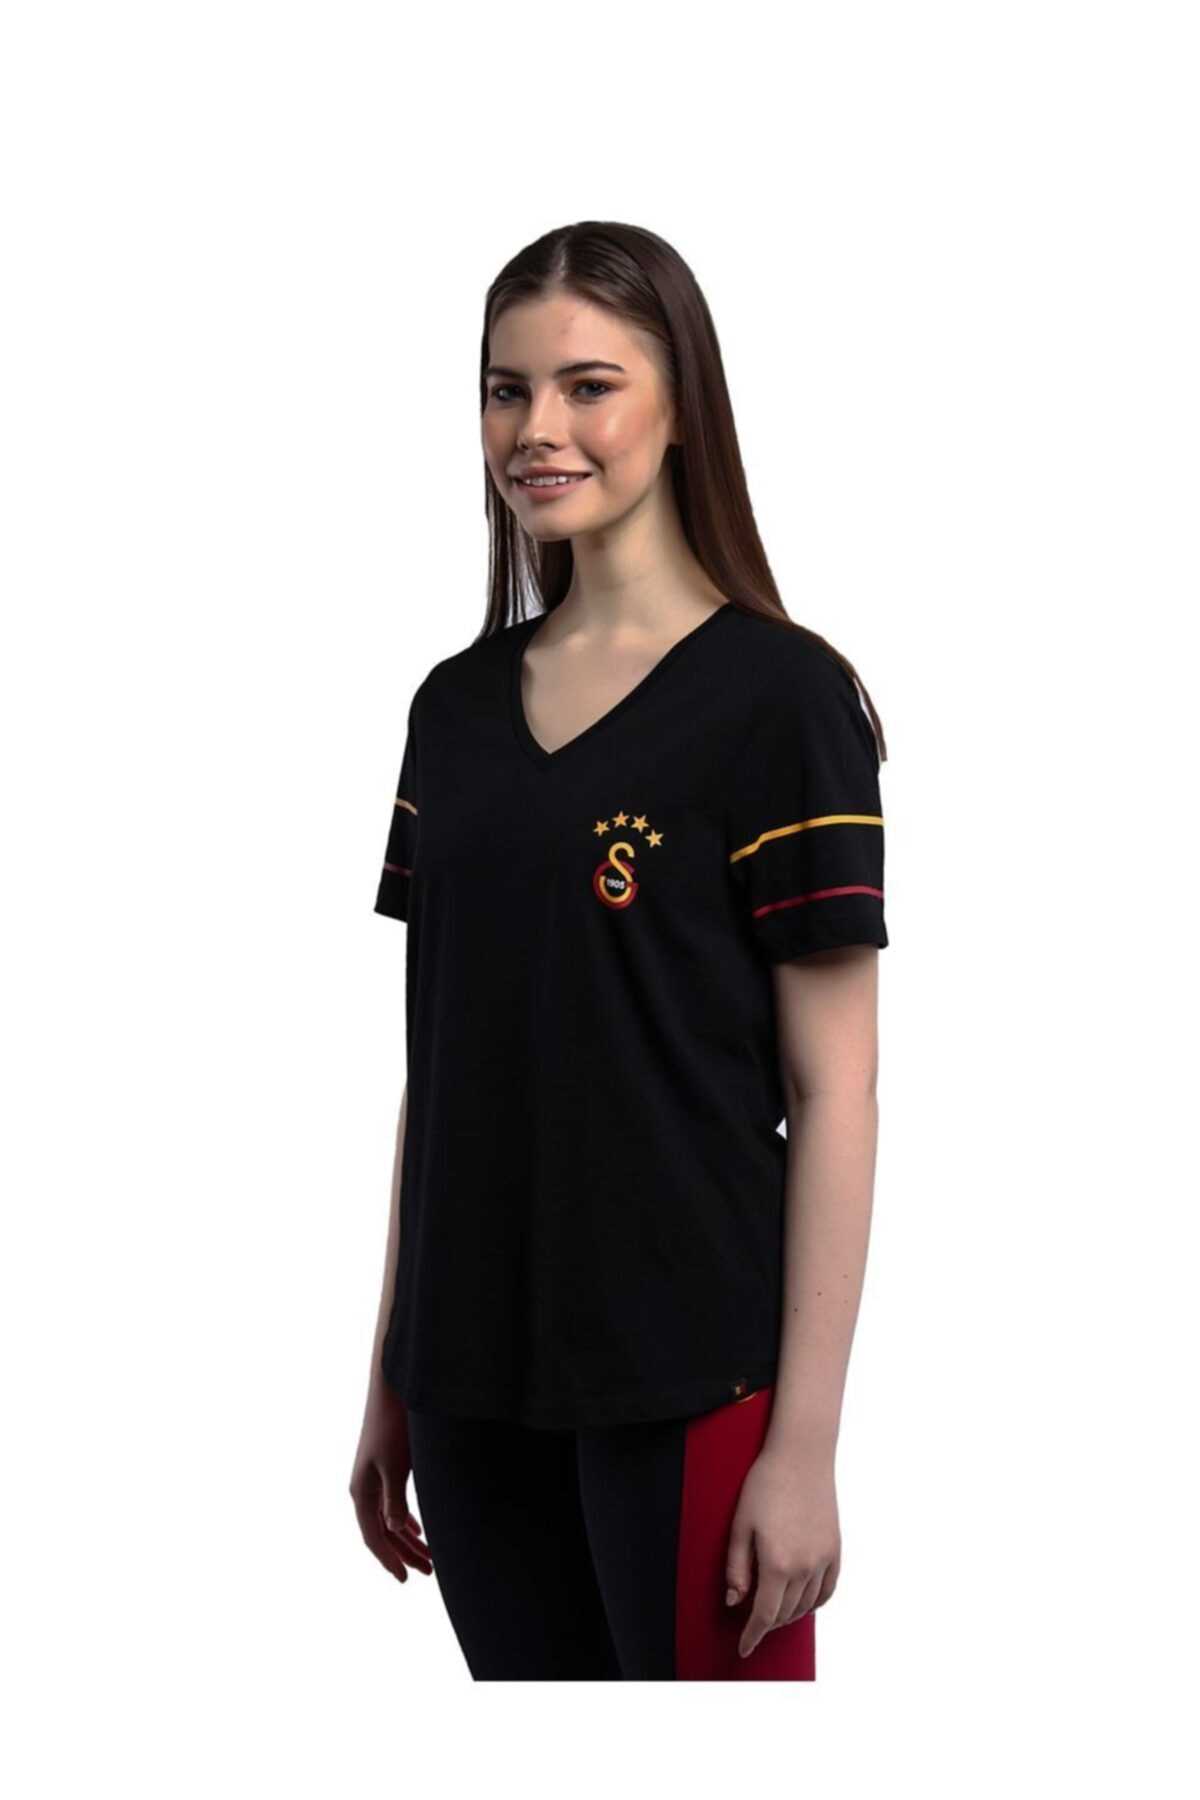 خرید انلاین تیشرت ورزشی زنانه خاص برند Galatasaray رنگ مشکی کد ty120187289